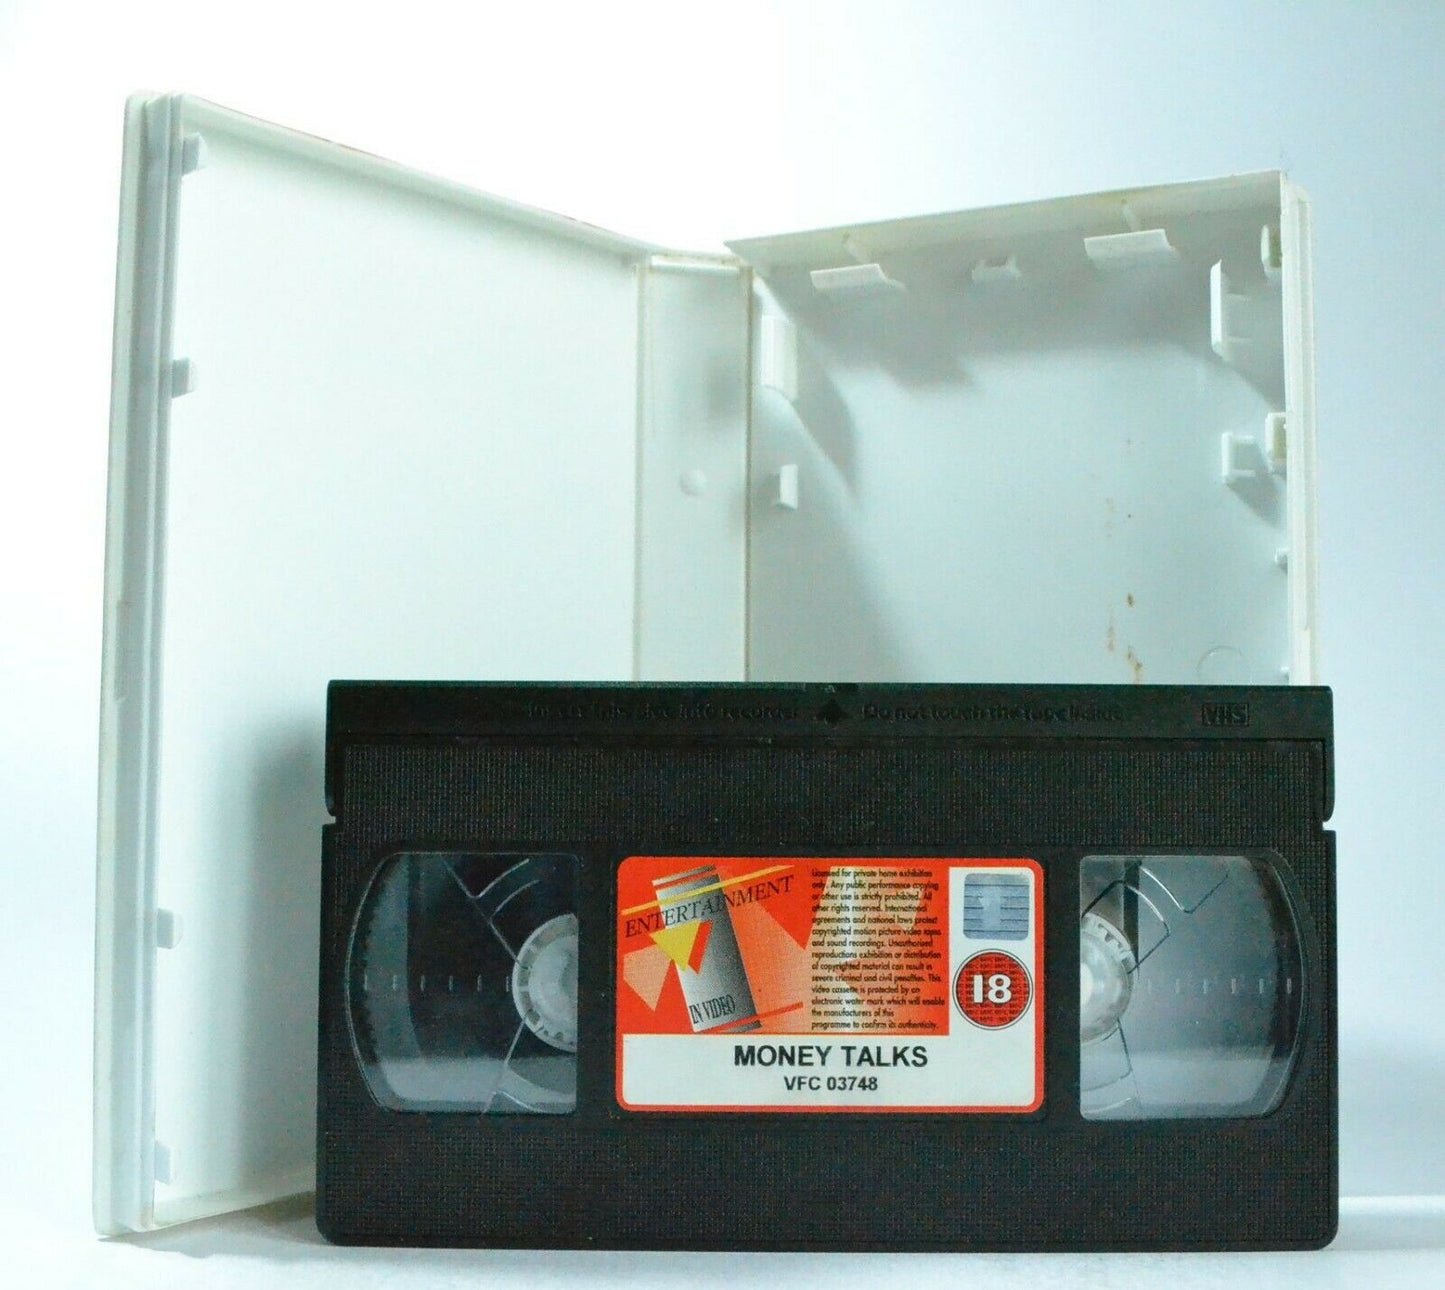 Money Talks: C.Tucker/C.Sheen - Action (1997) - Large Box - Ex-Rental - Pal VHS-